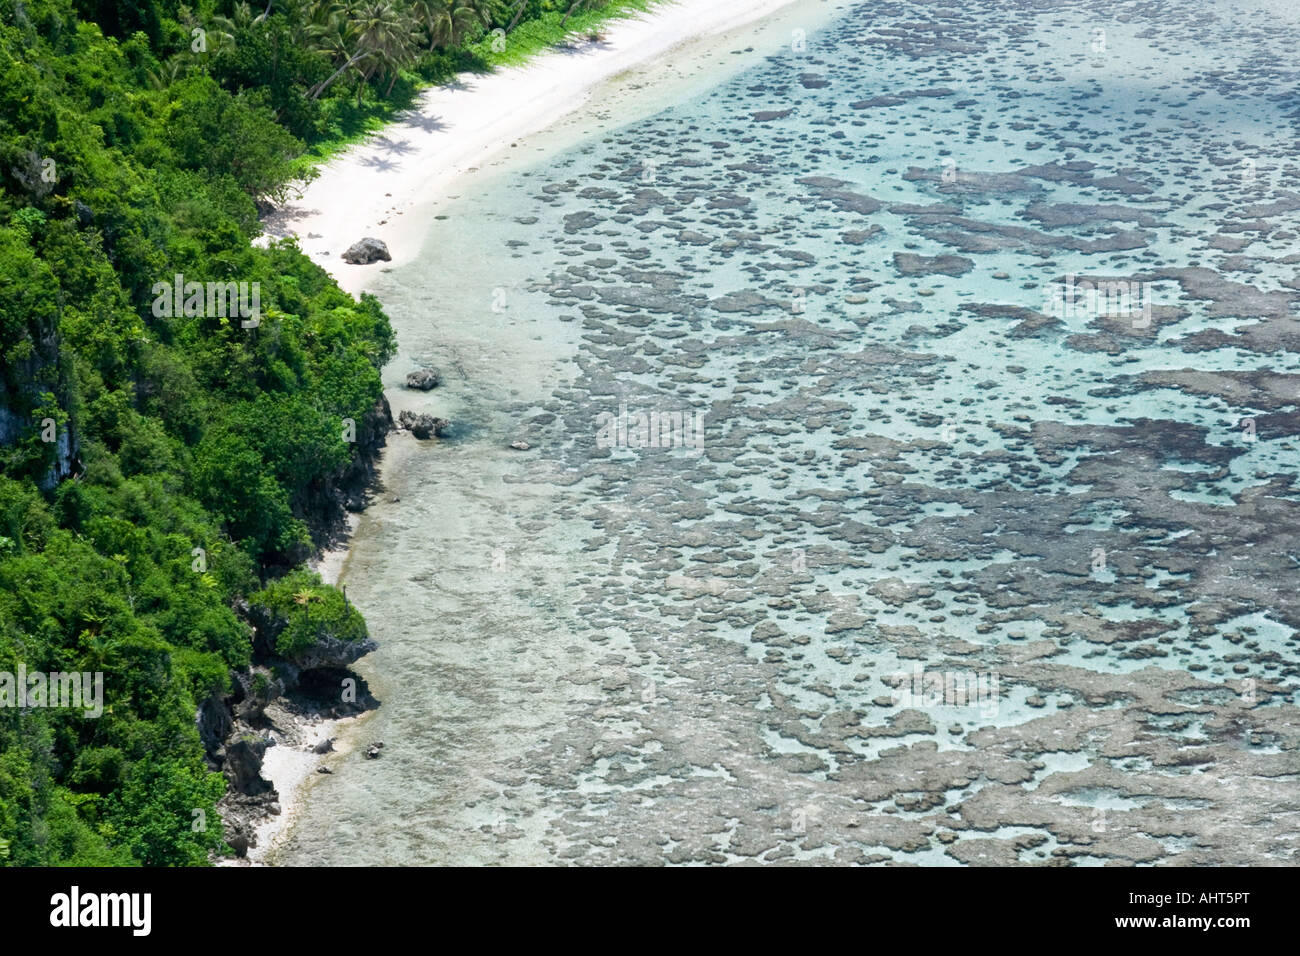 Coral Beach and Jungle Guam Stock Photo